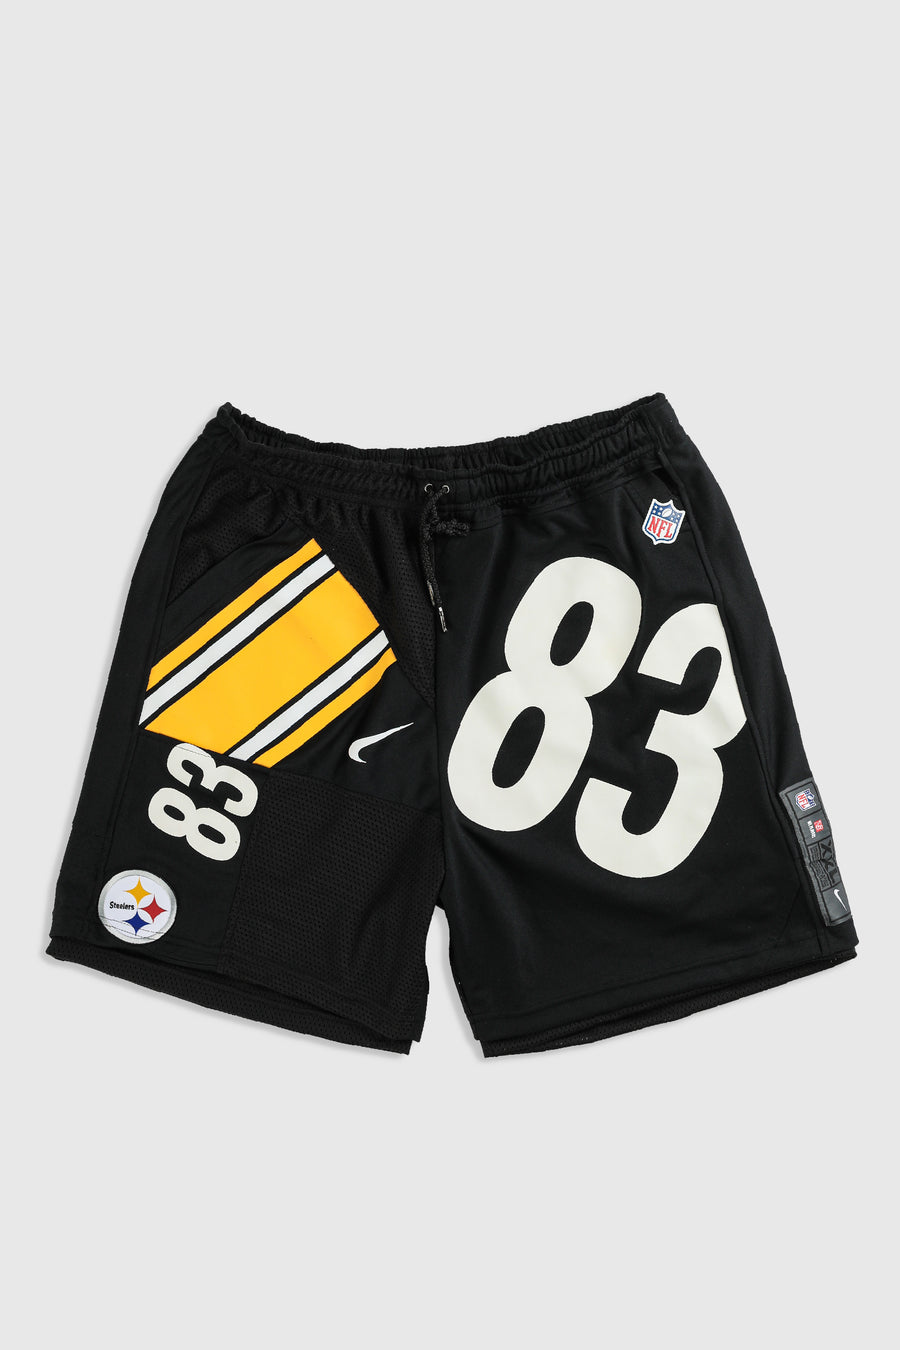 Unisex Rework Steelers NFL Jersey Shorts - XL